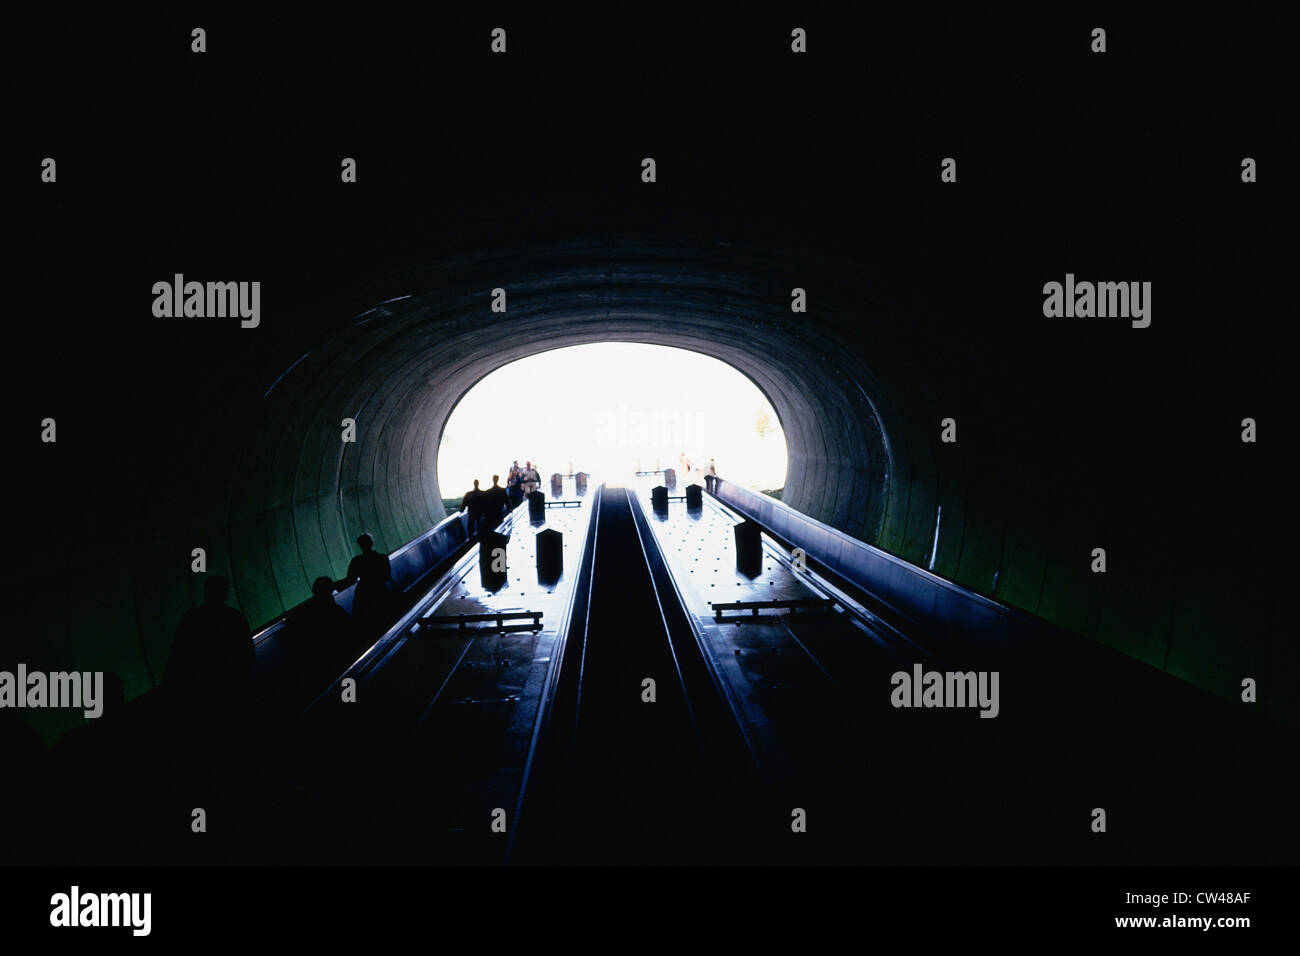 Moving walkway inside tunnel Stock Photo